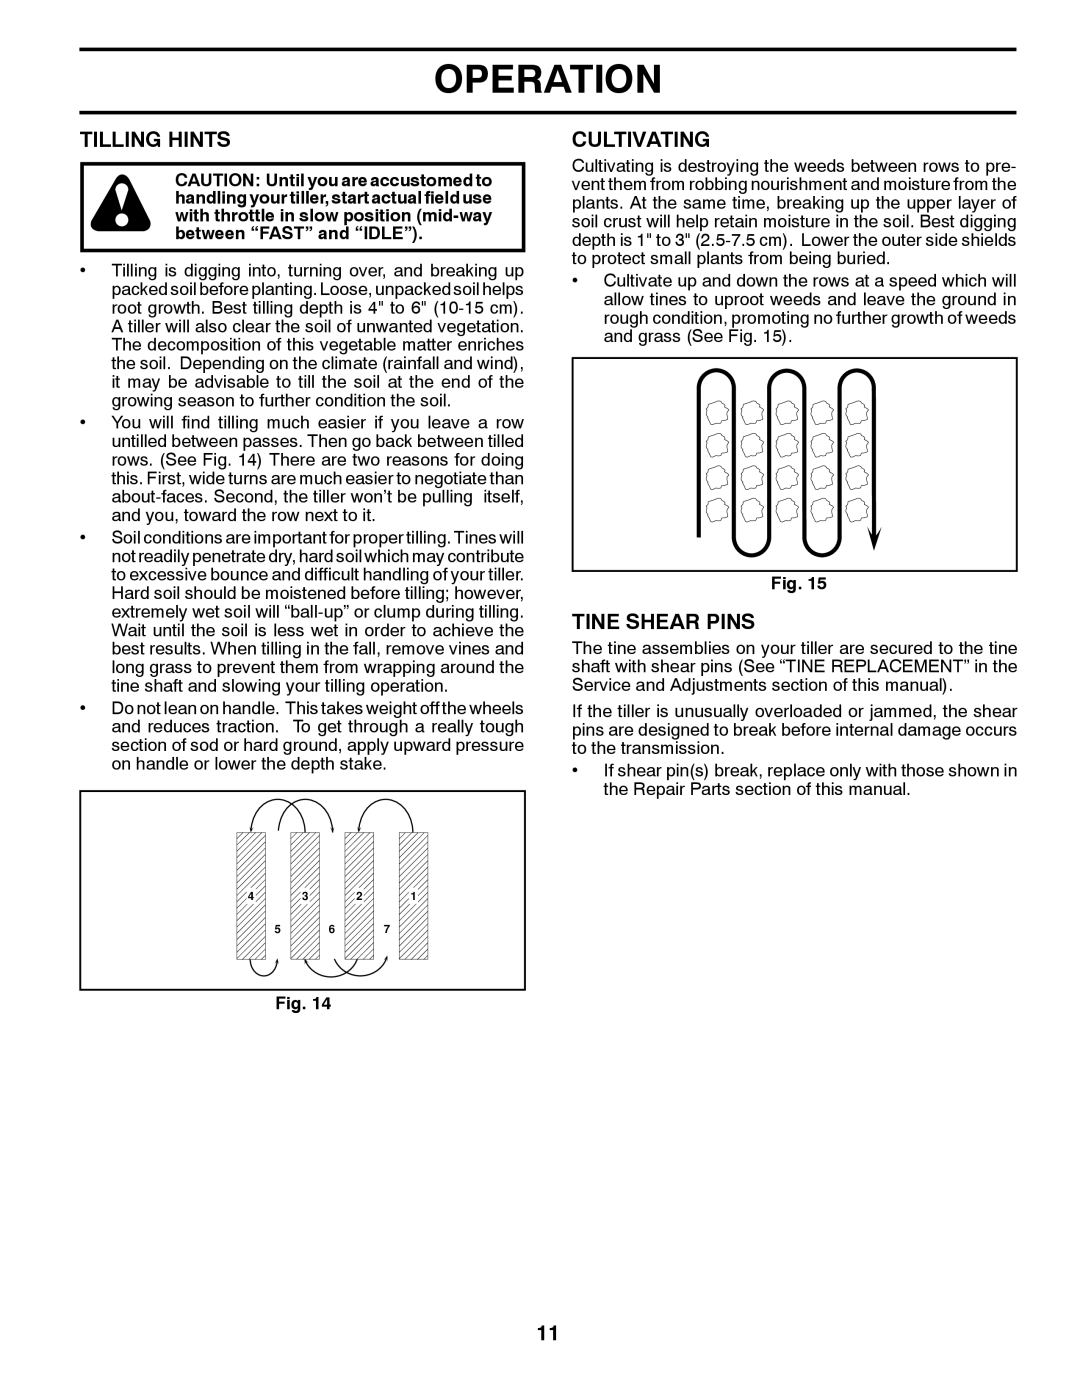 Poulan PRRT900 manual Tilling Hints, Cultivating, Tine Shear Pins, Operation 